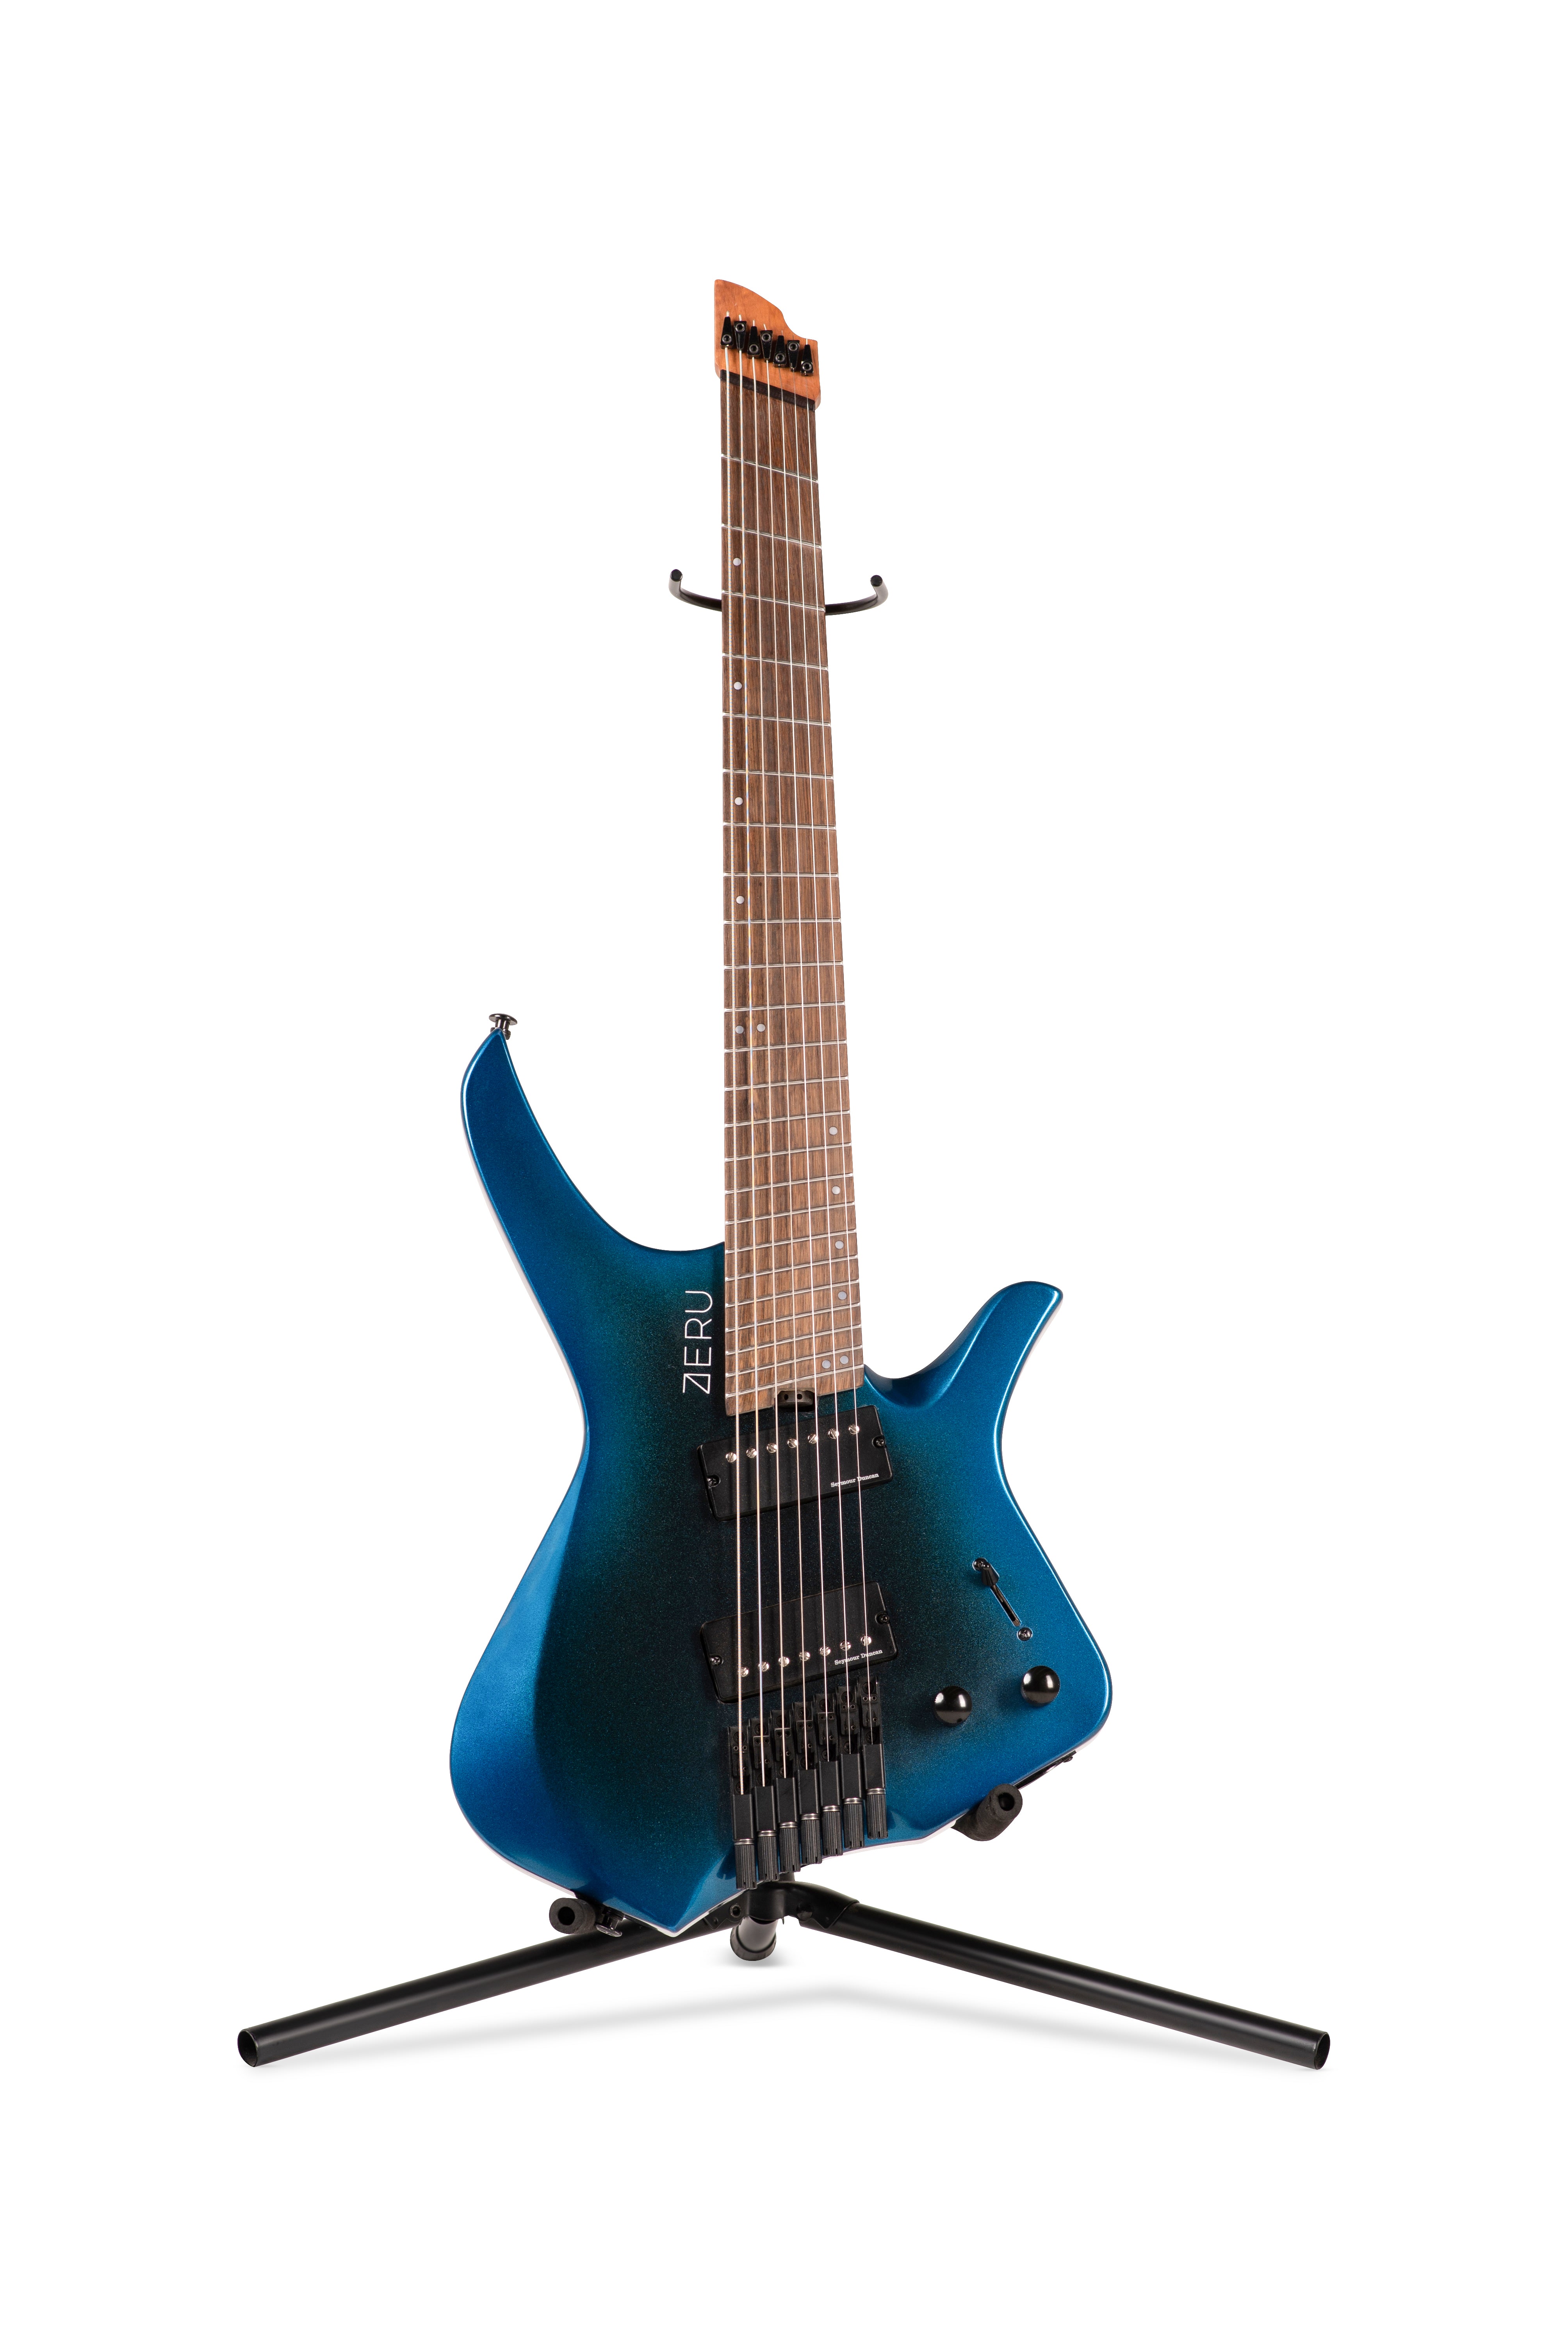 ZERU VOID Series 7 String Headless Guitar in Urdina Nebula